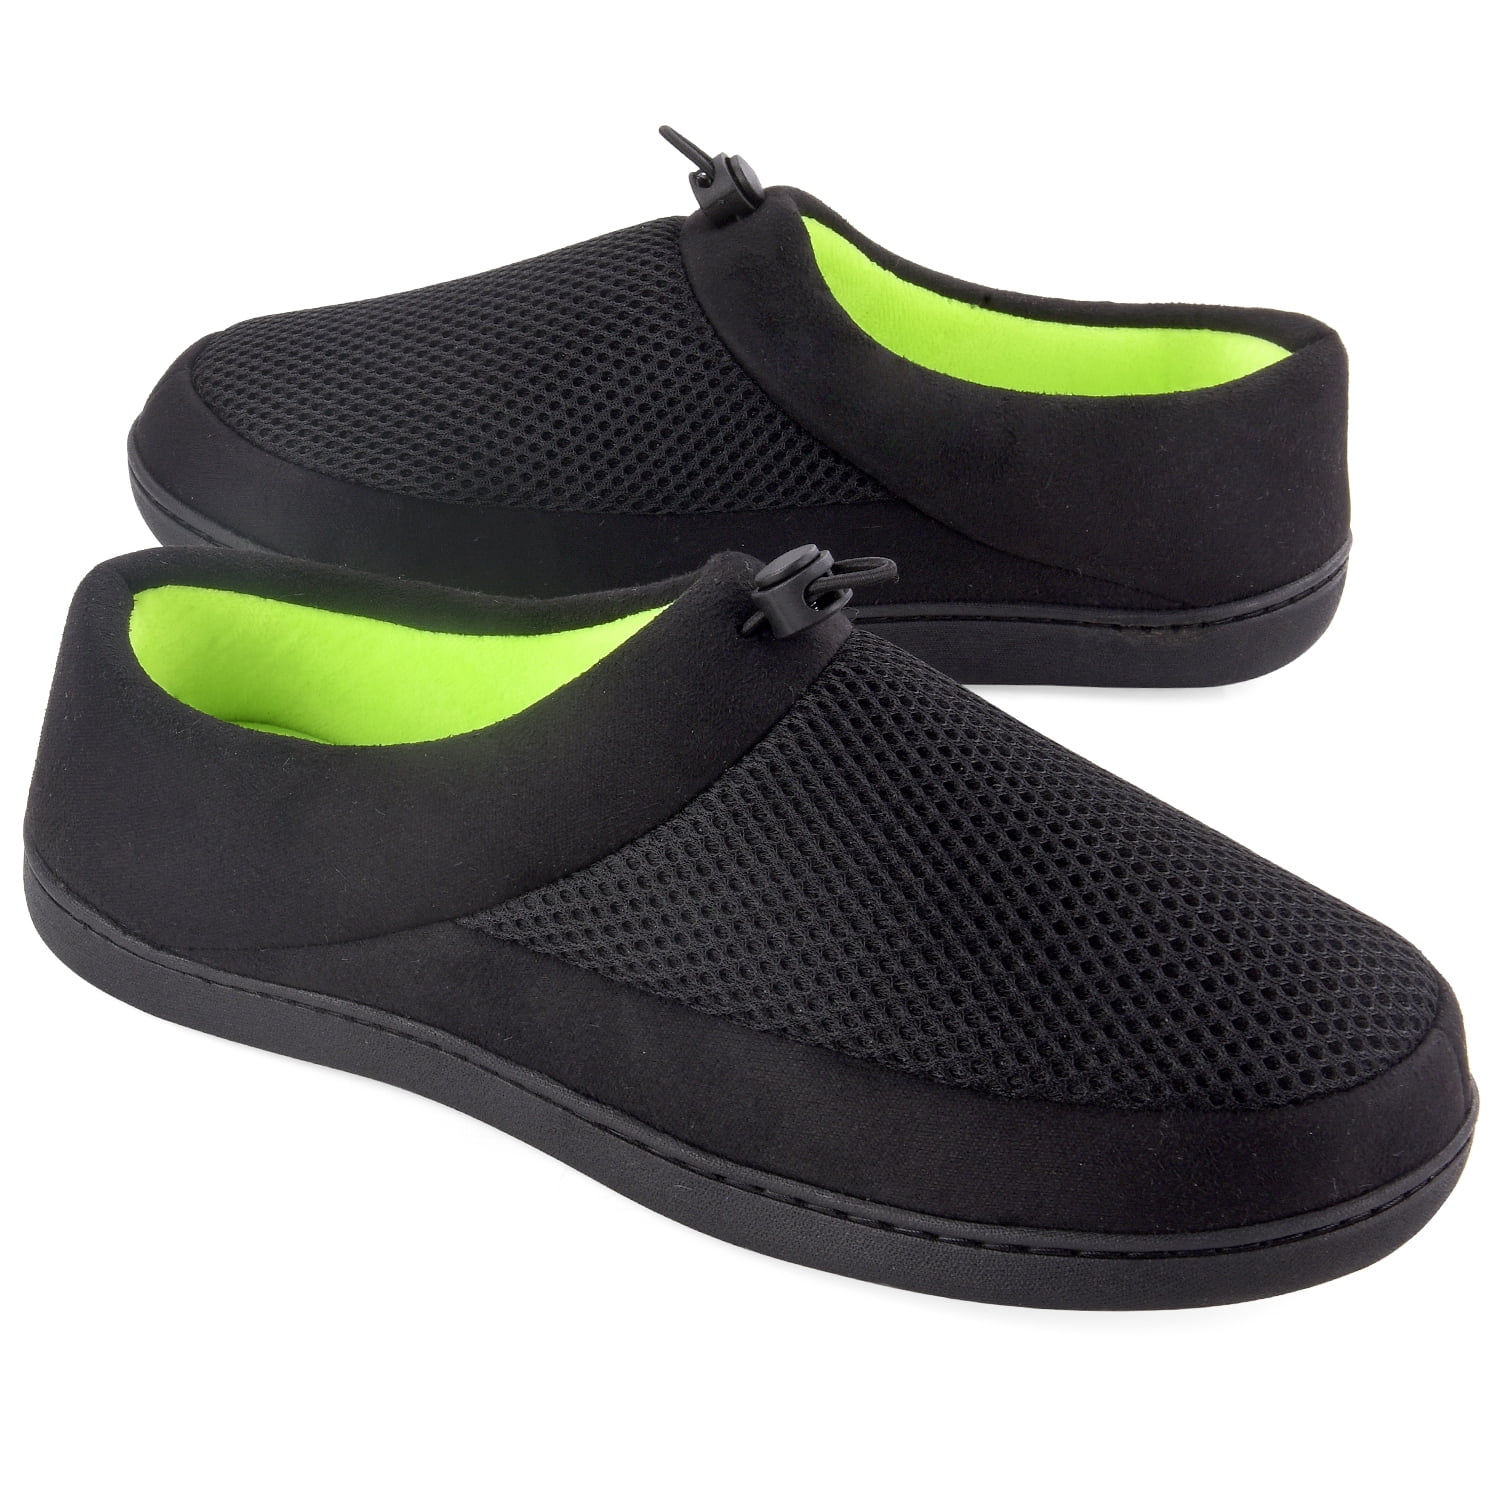 Men's Memory Foam Anti-Slip House Slippers Spring Summer Breathable Indoor Shoes